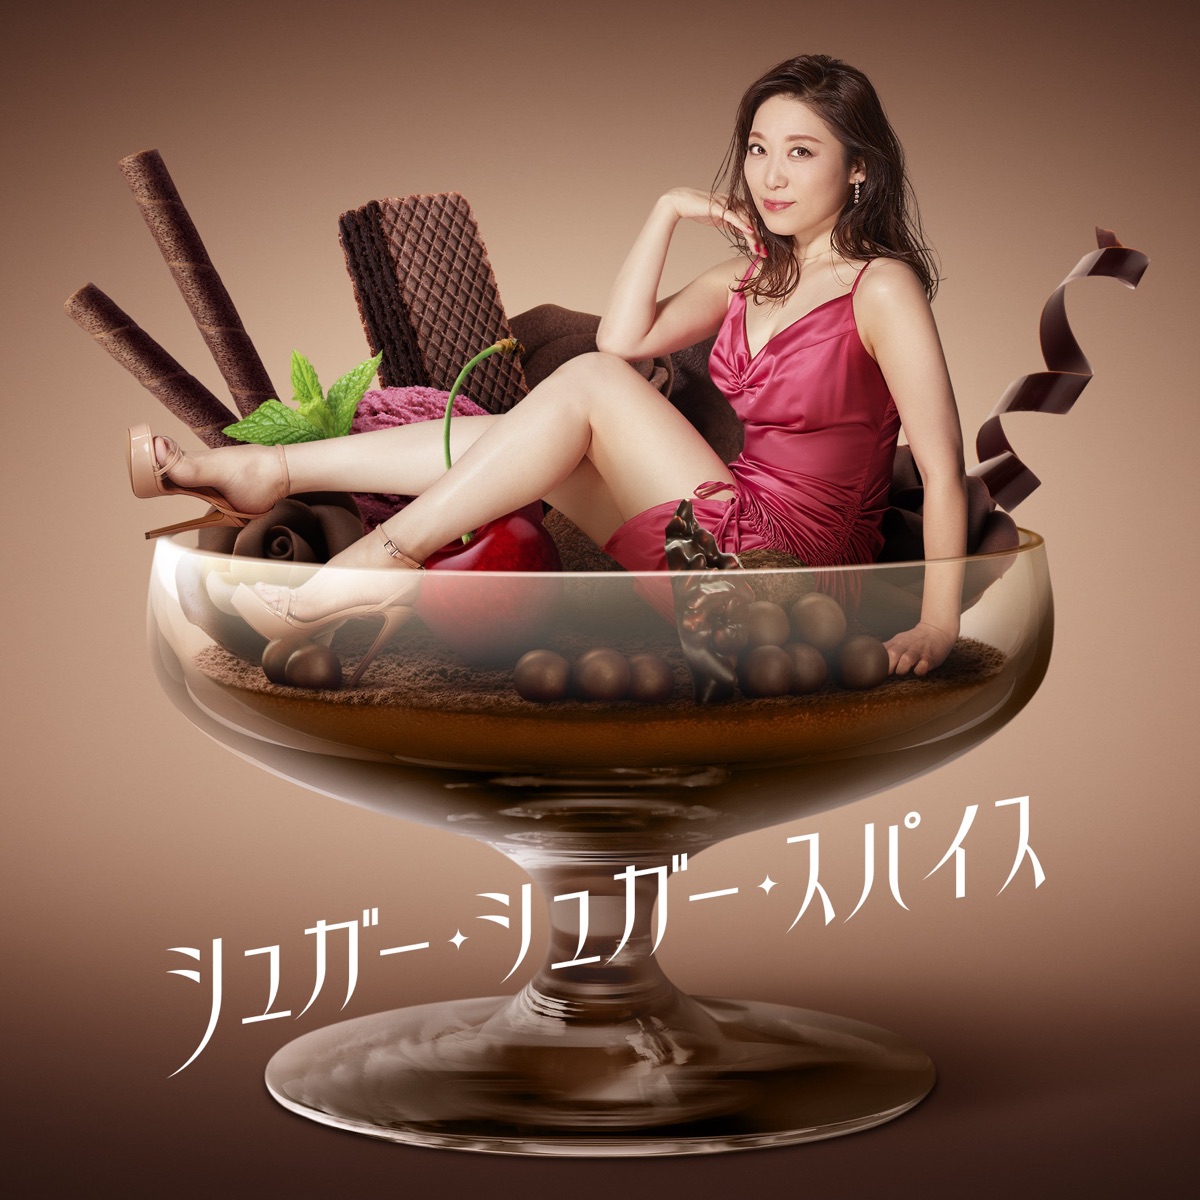 Cover art for『Minami Kuribayashi - イノセント』from the release『Sugar Sugar Spice